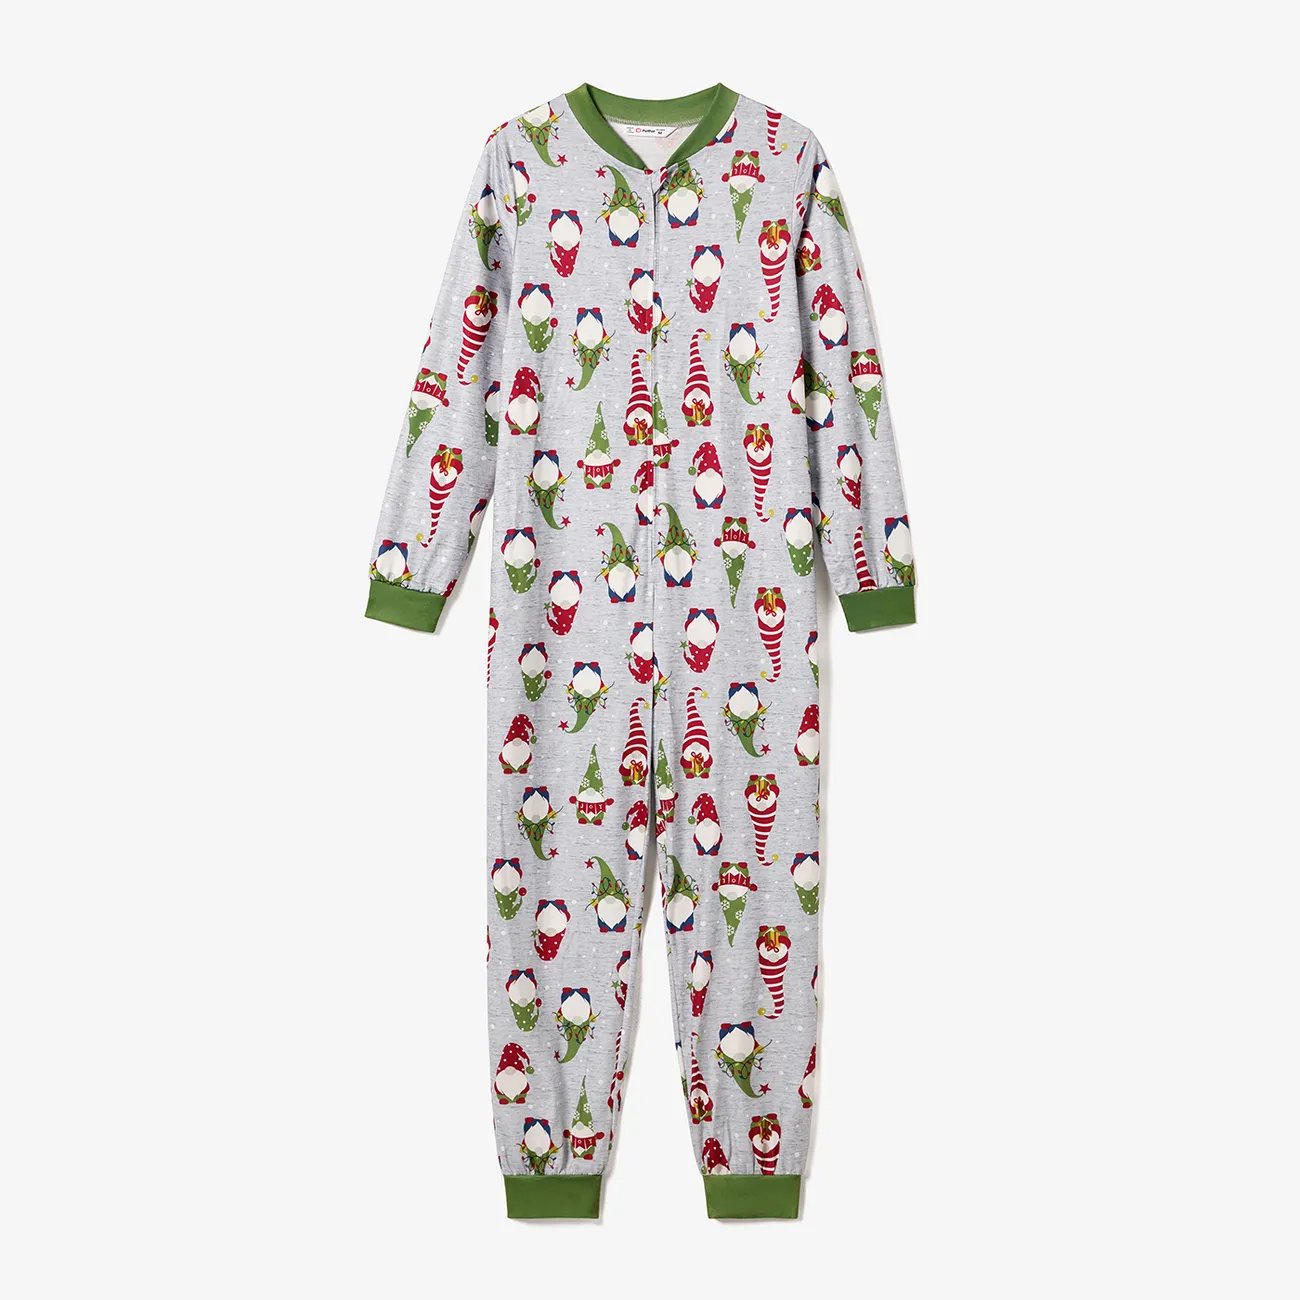 Christmas Family Matching Gnome All-over Print Long-sleeve Onesies Pajamas (Flame resistant) Green big image 1